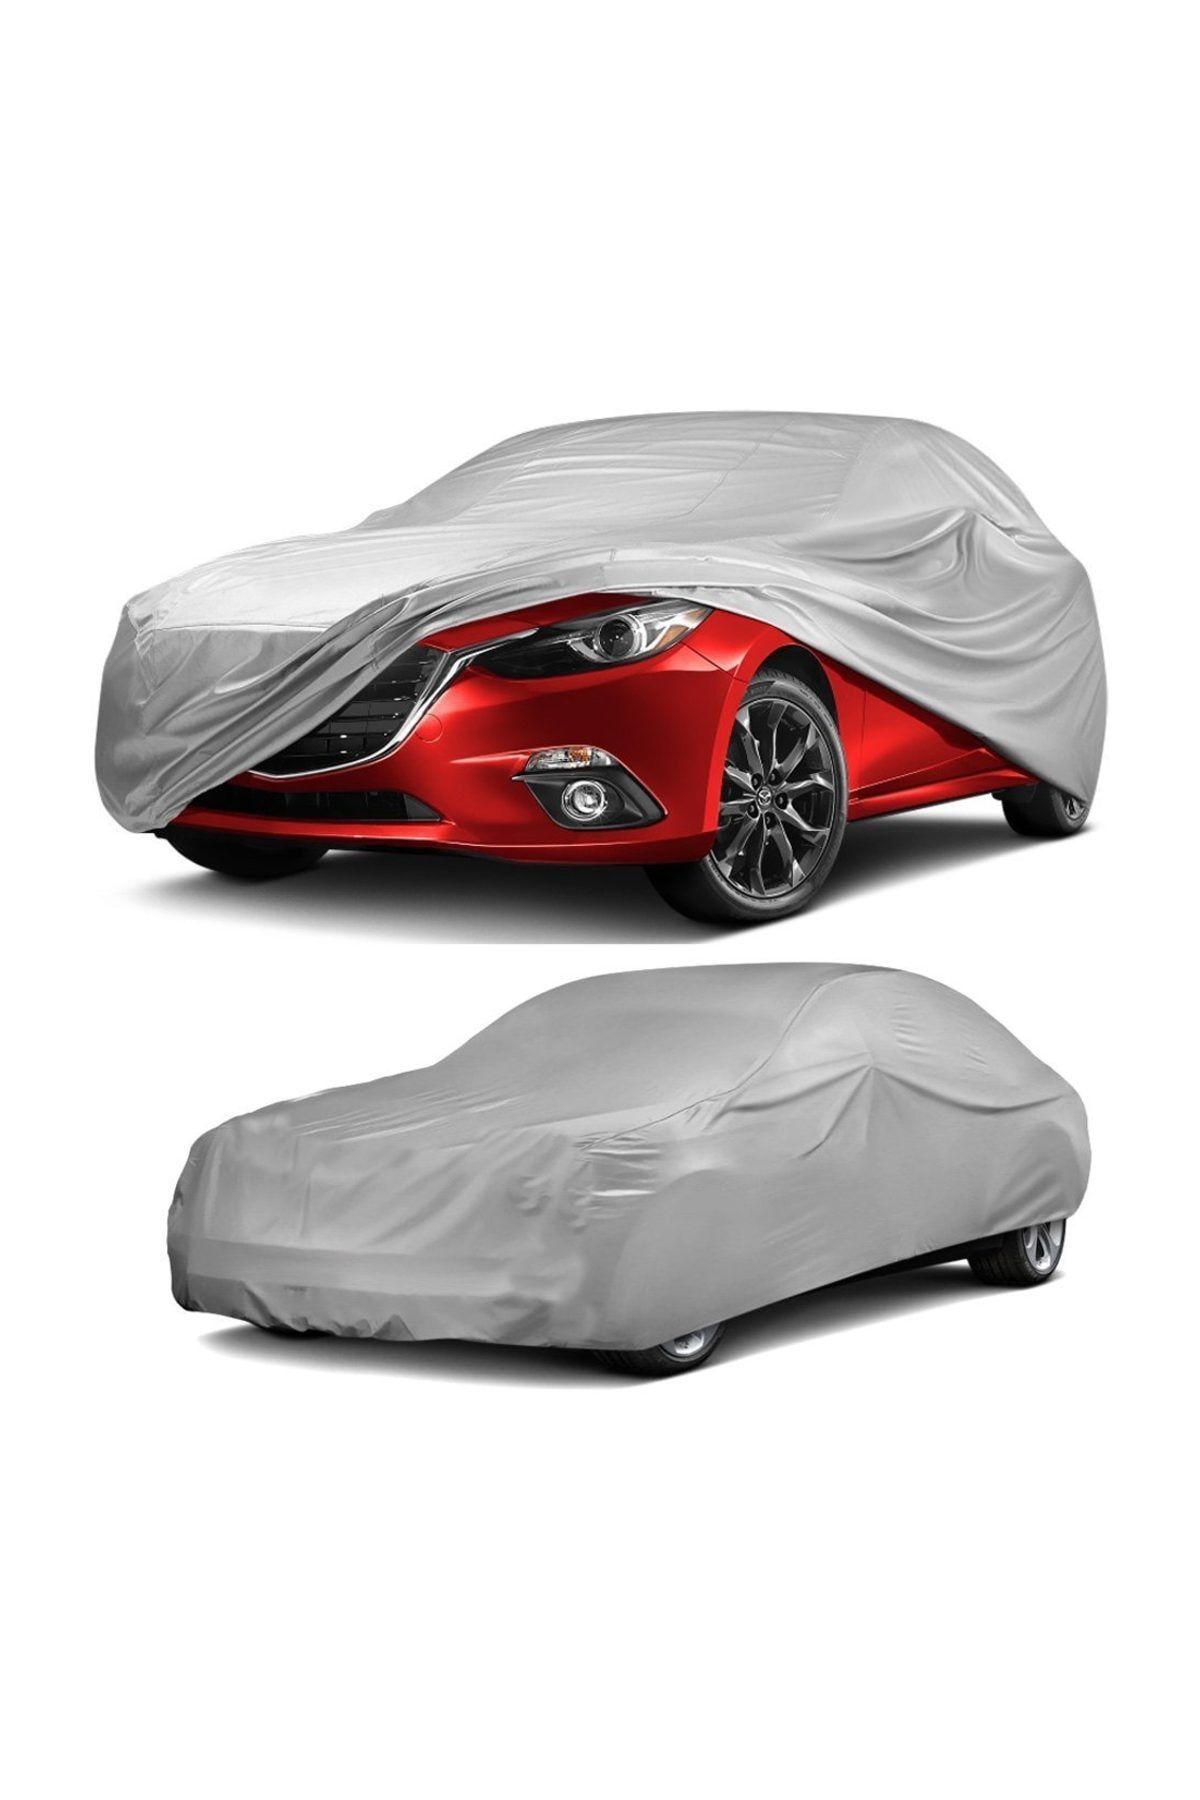 AutoEN CoverPlus Audi A1 Auto Tarpaulin Car Tent - Gray